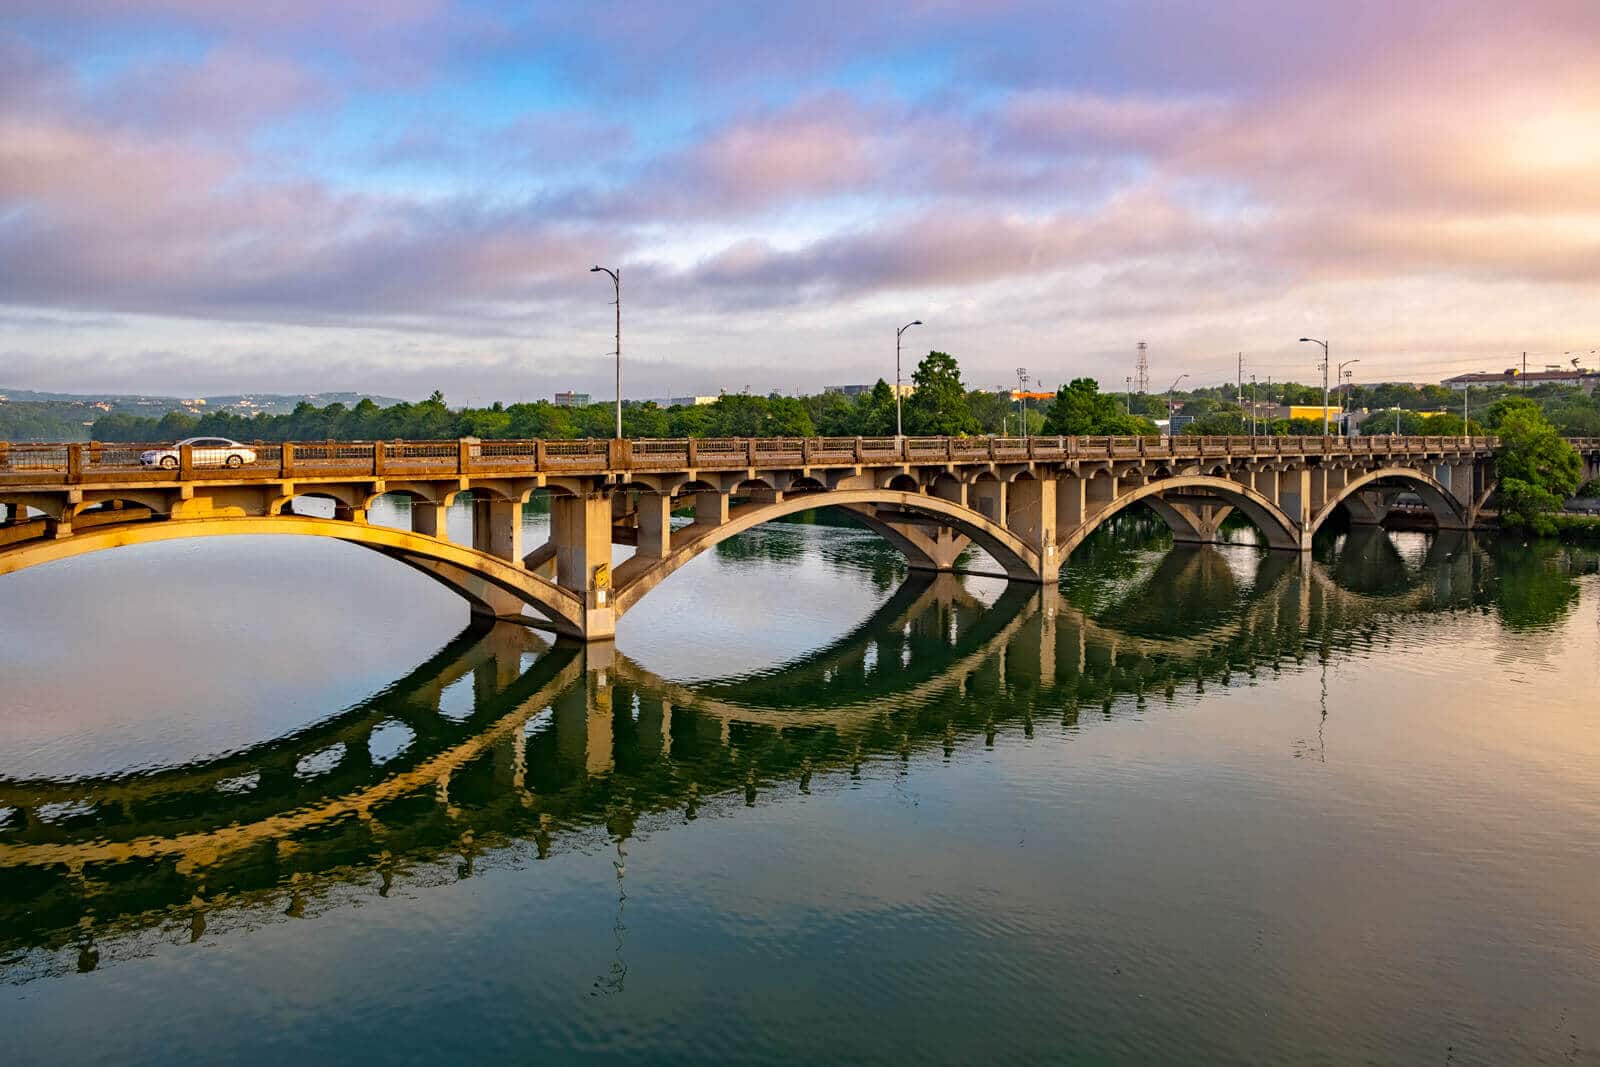 Bridge in Austin, Texas over the Colorado river.